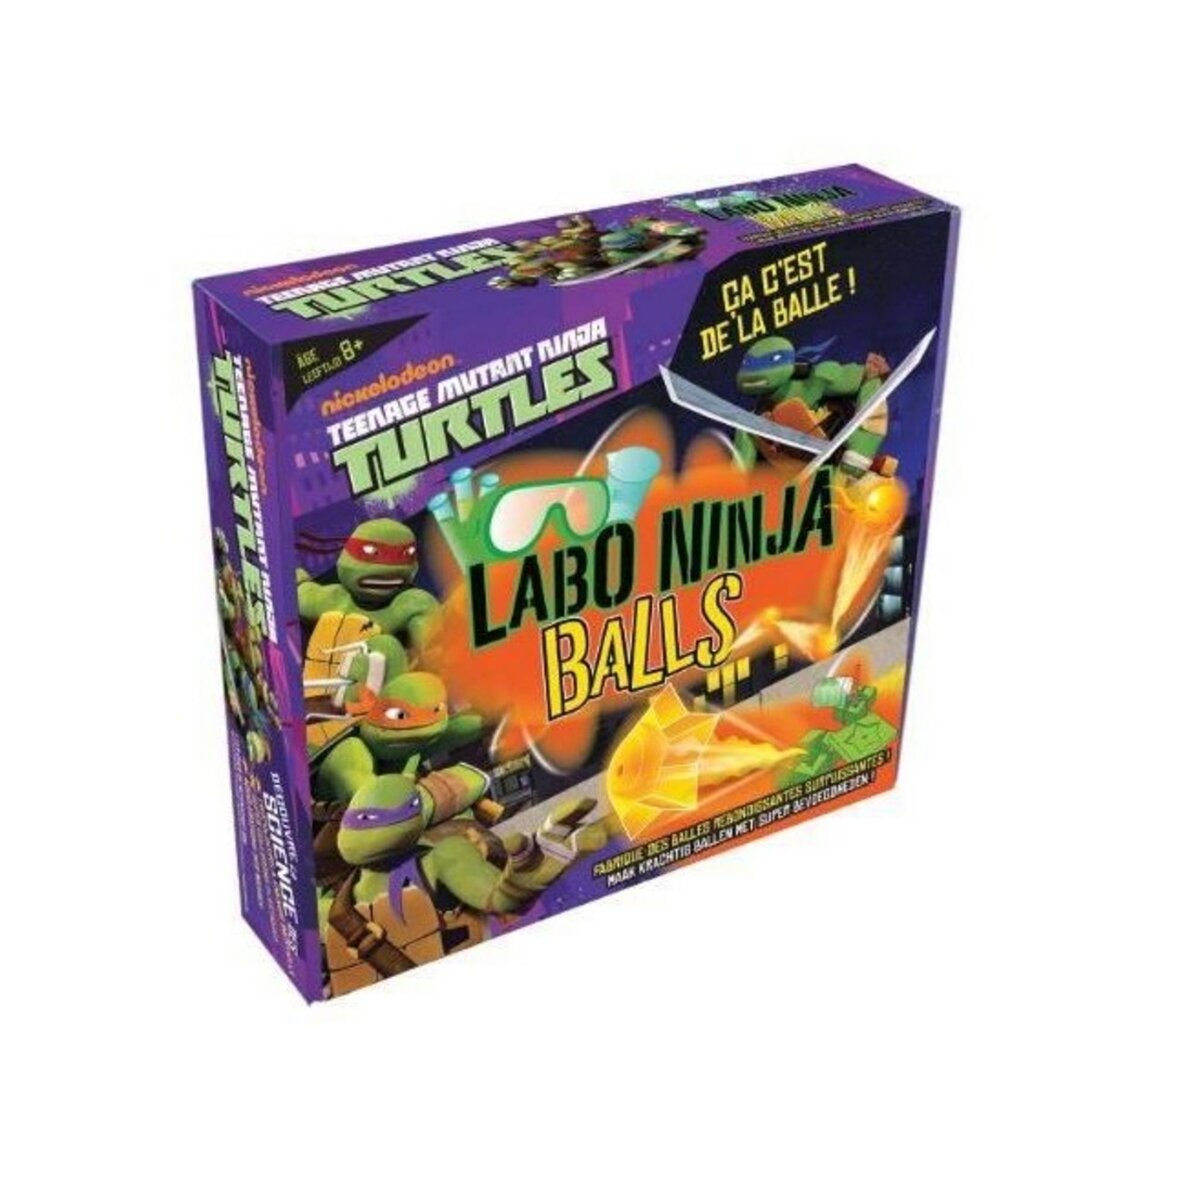 Labo Ninja Balls